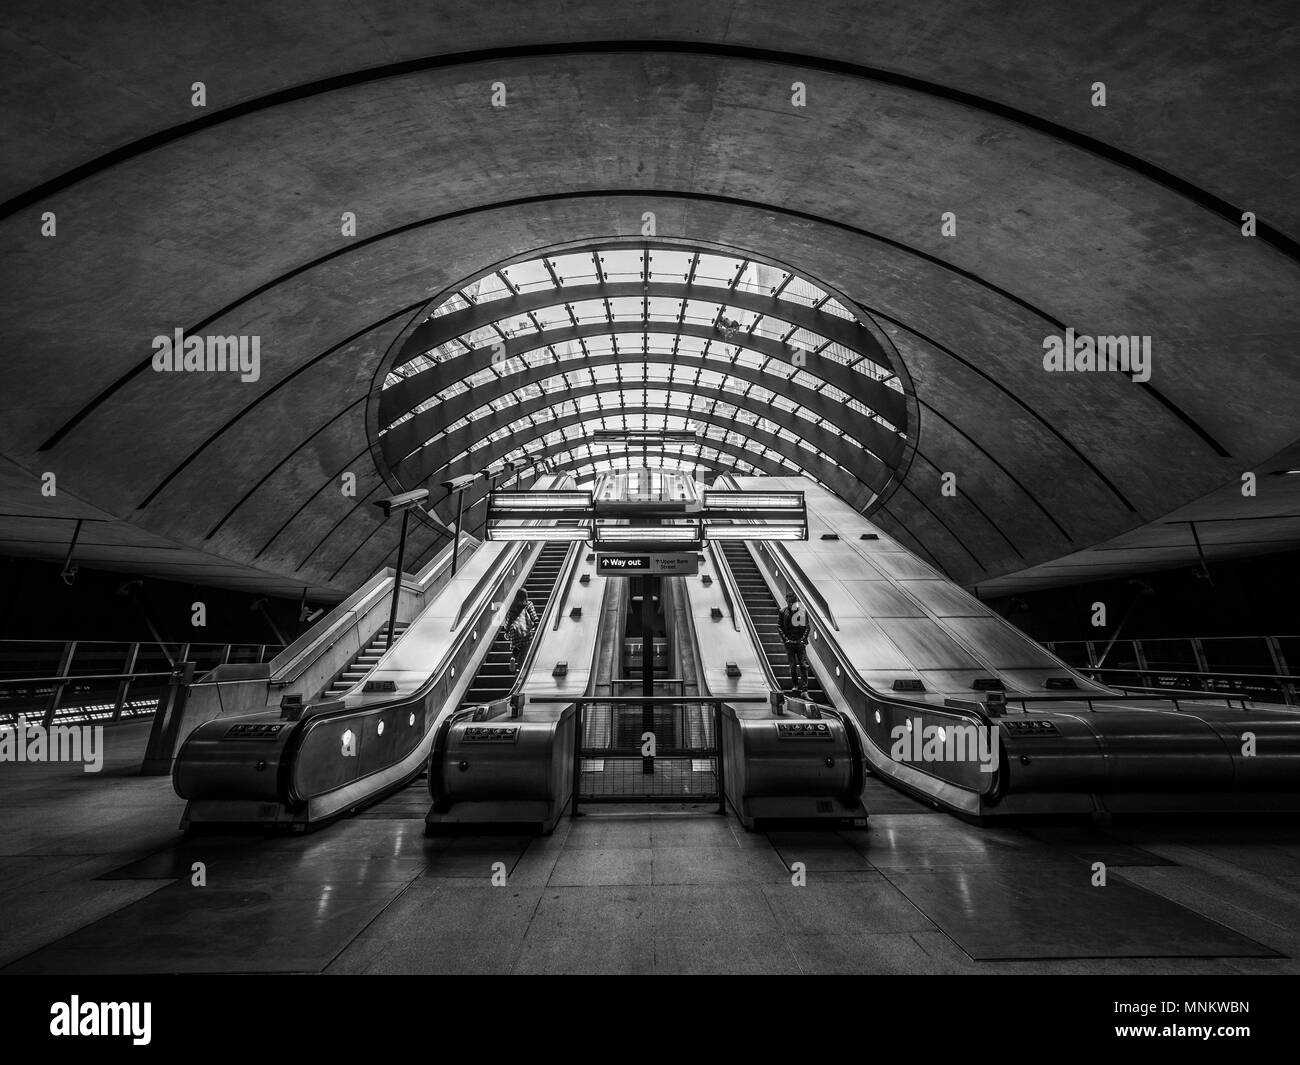 Escalators in entrance to Jubilee line tube station, Canary Wharf, London, UK. Stock Photo